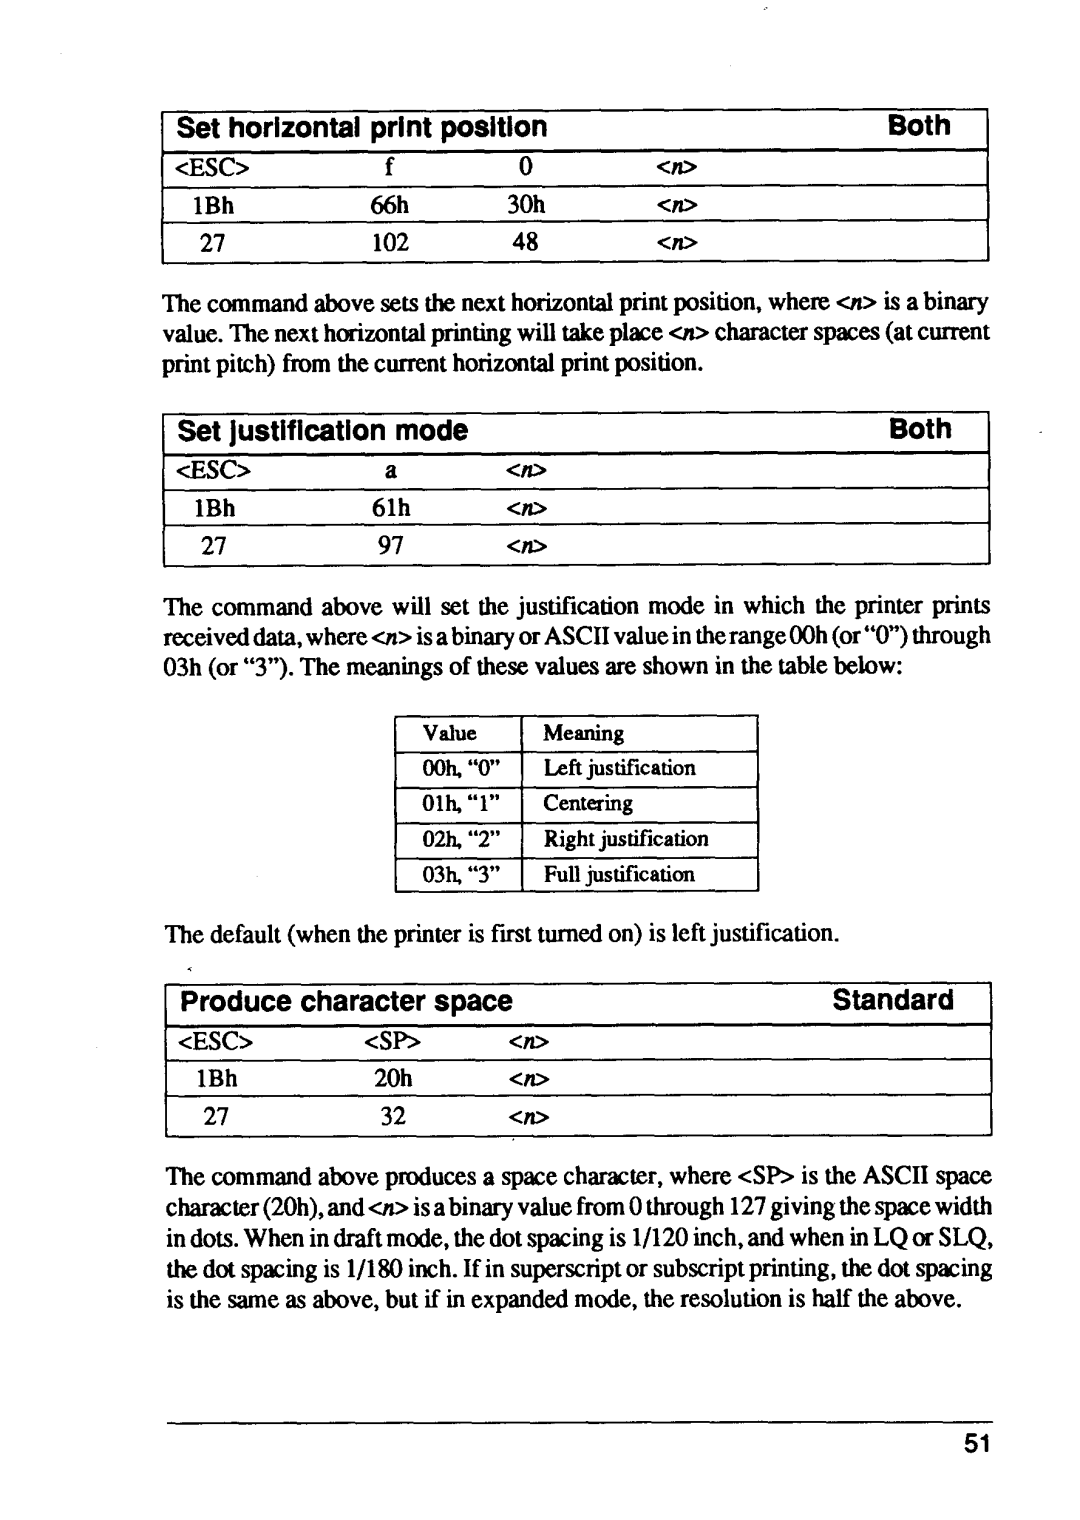 Star Micronics XB24-15 Set horizontal print posltion, Both, Set justification mode, Produce character space, Standard 